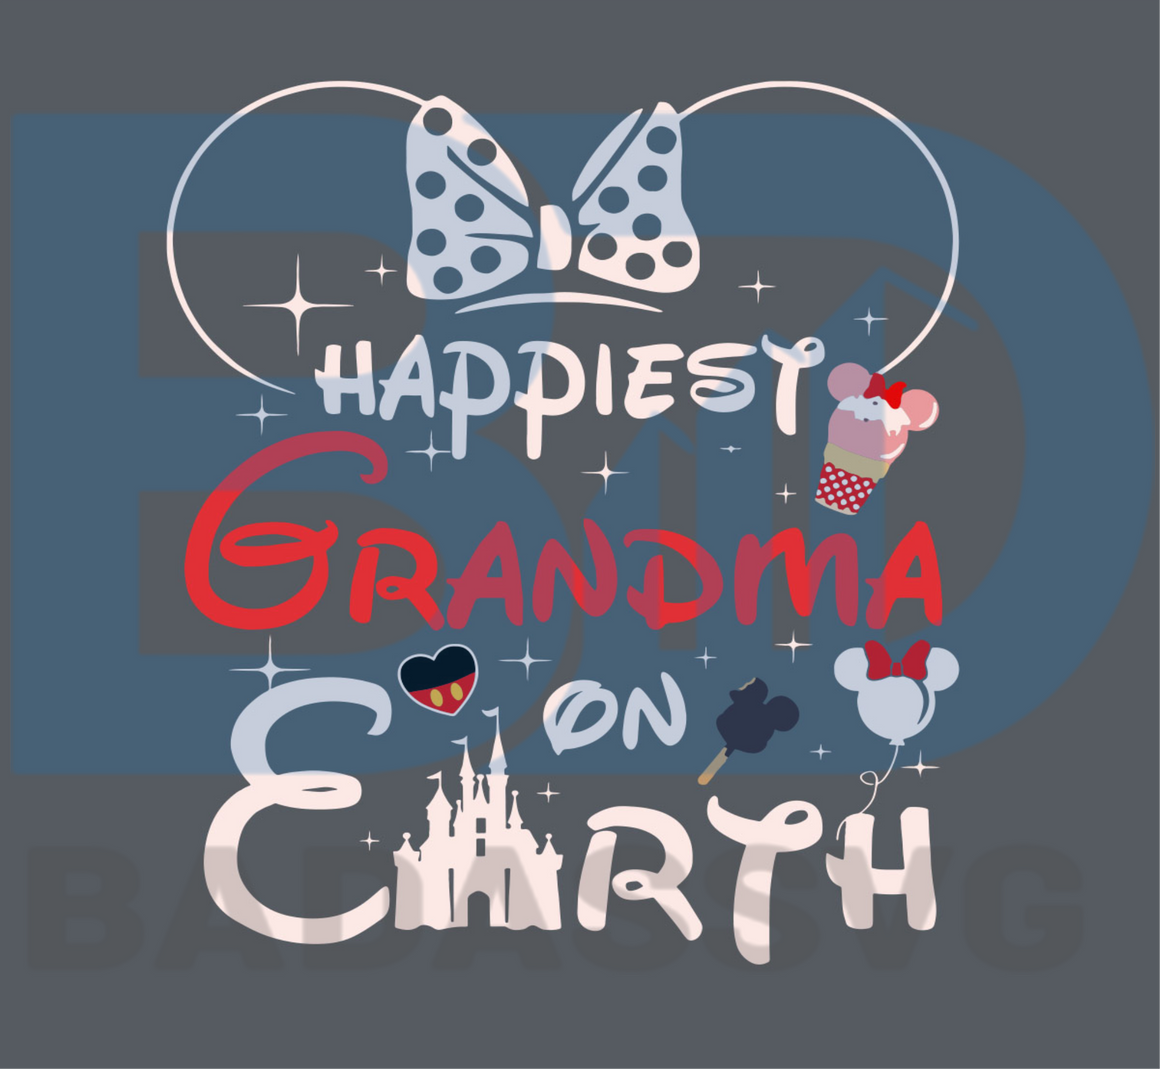 Download Happiest Grandma On Earth Svg, Trending Svg, Disney Svg ...